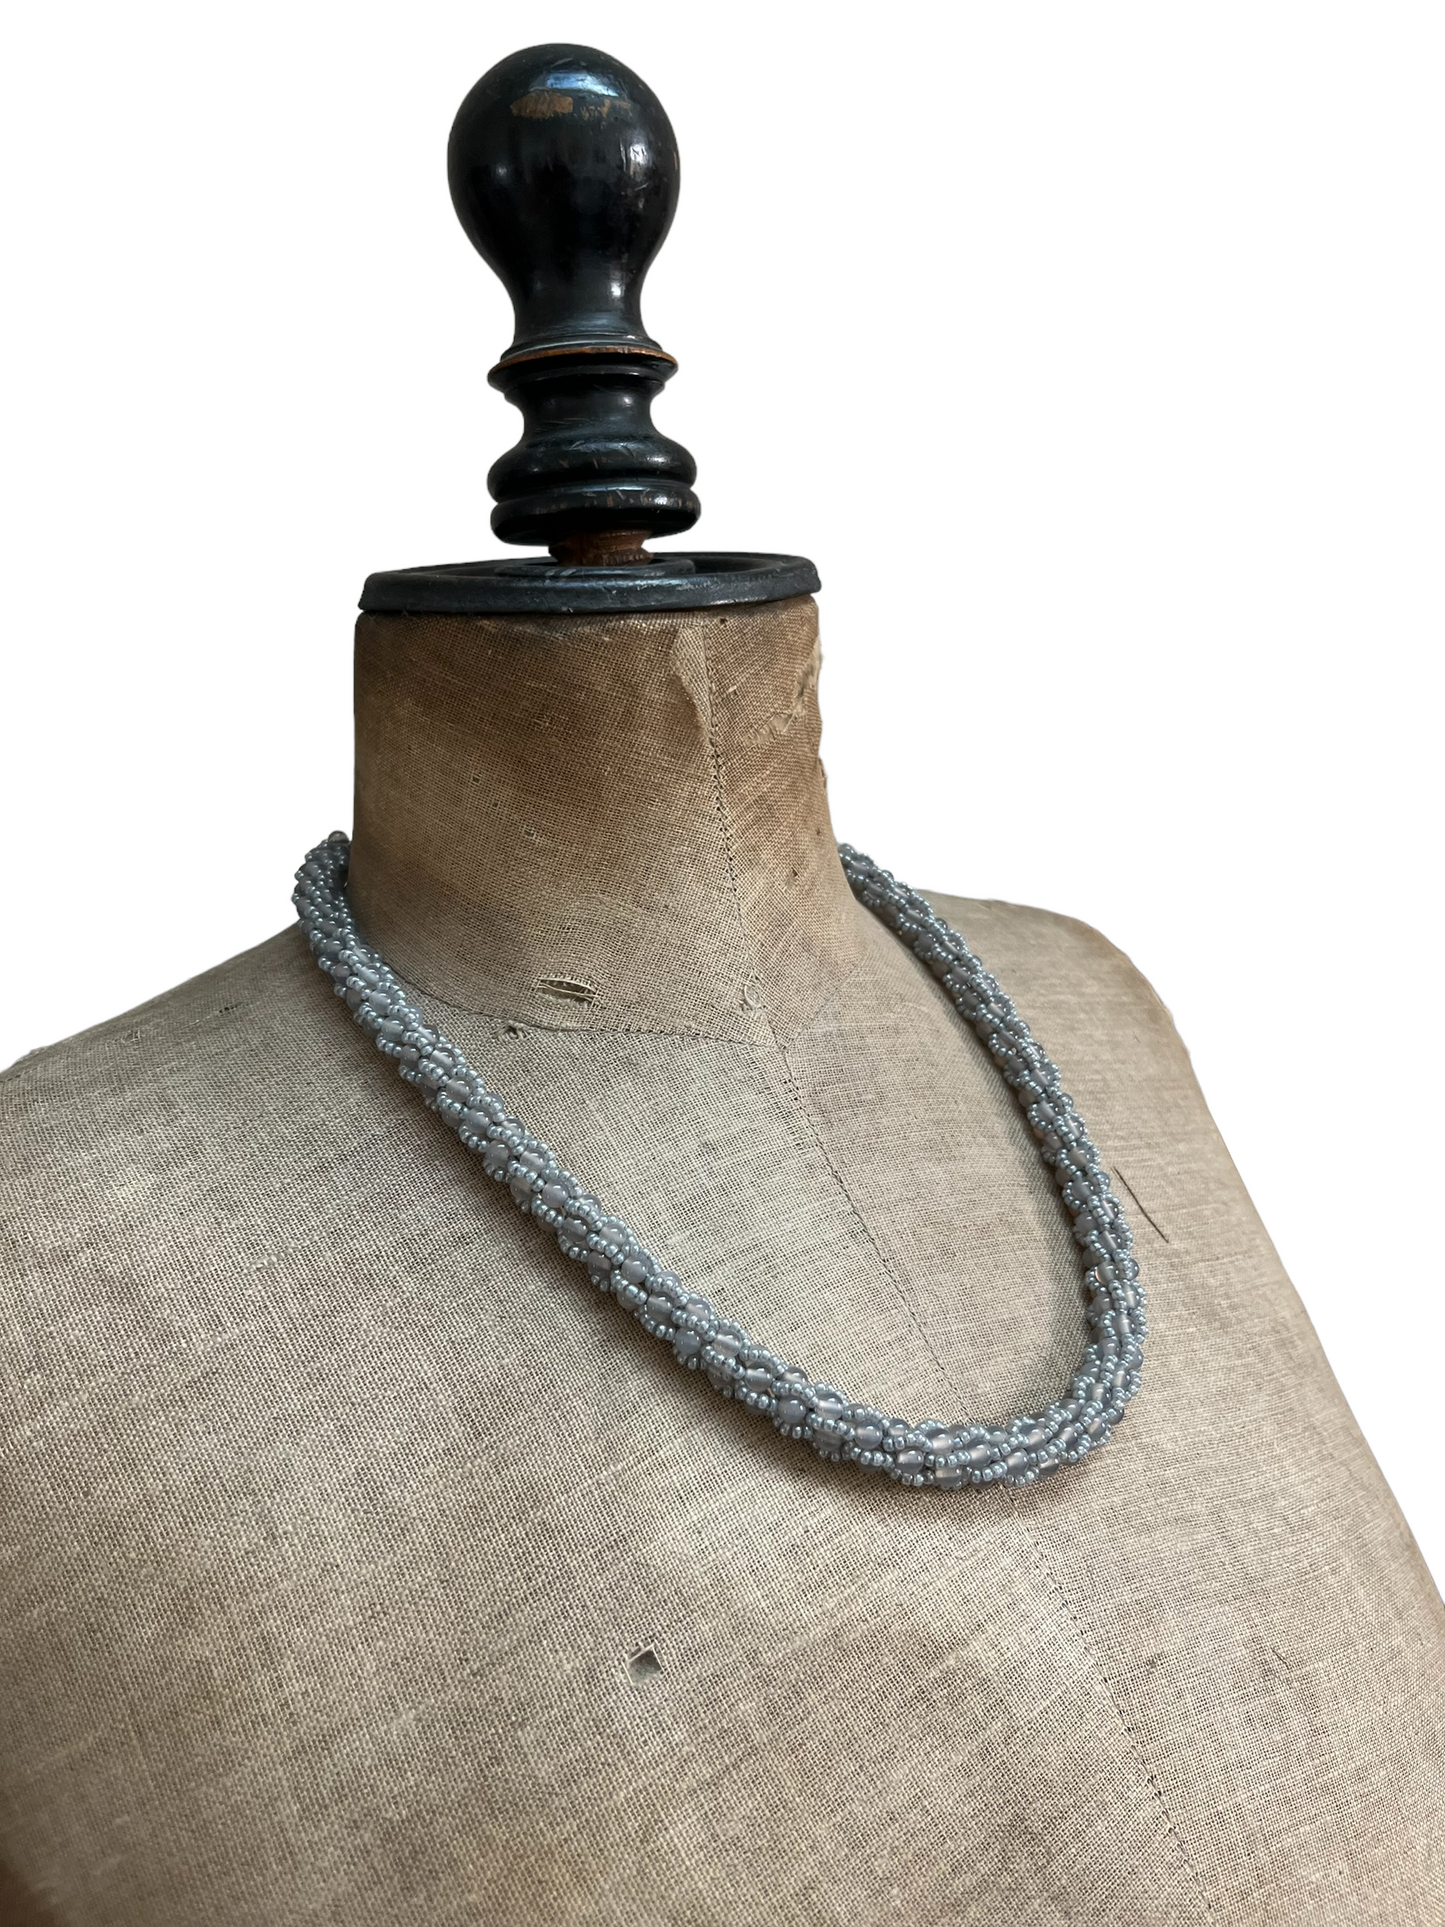 Collier au crochet en agate et perles Miyuki, 51 cm